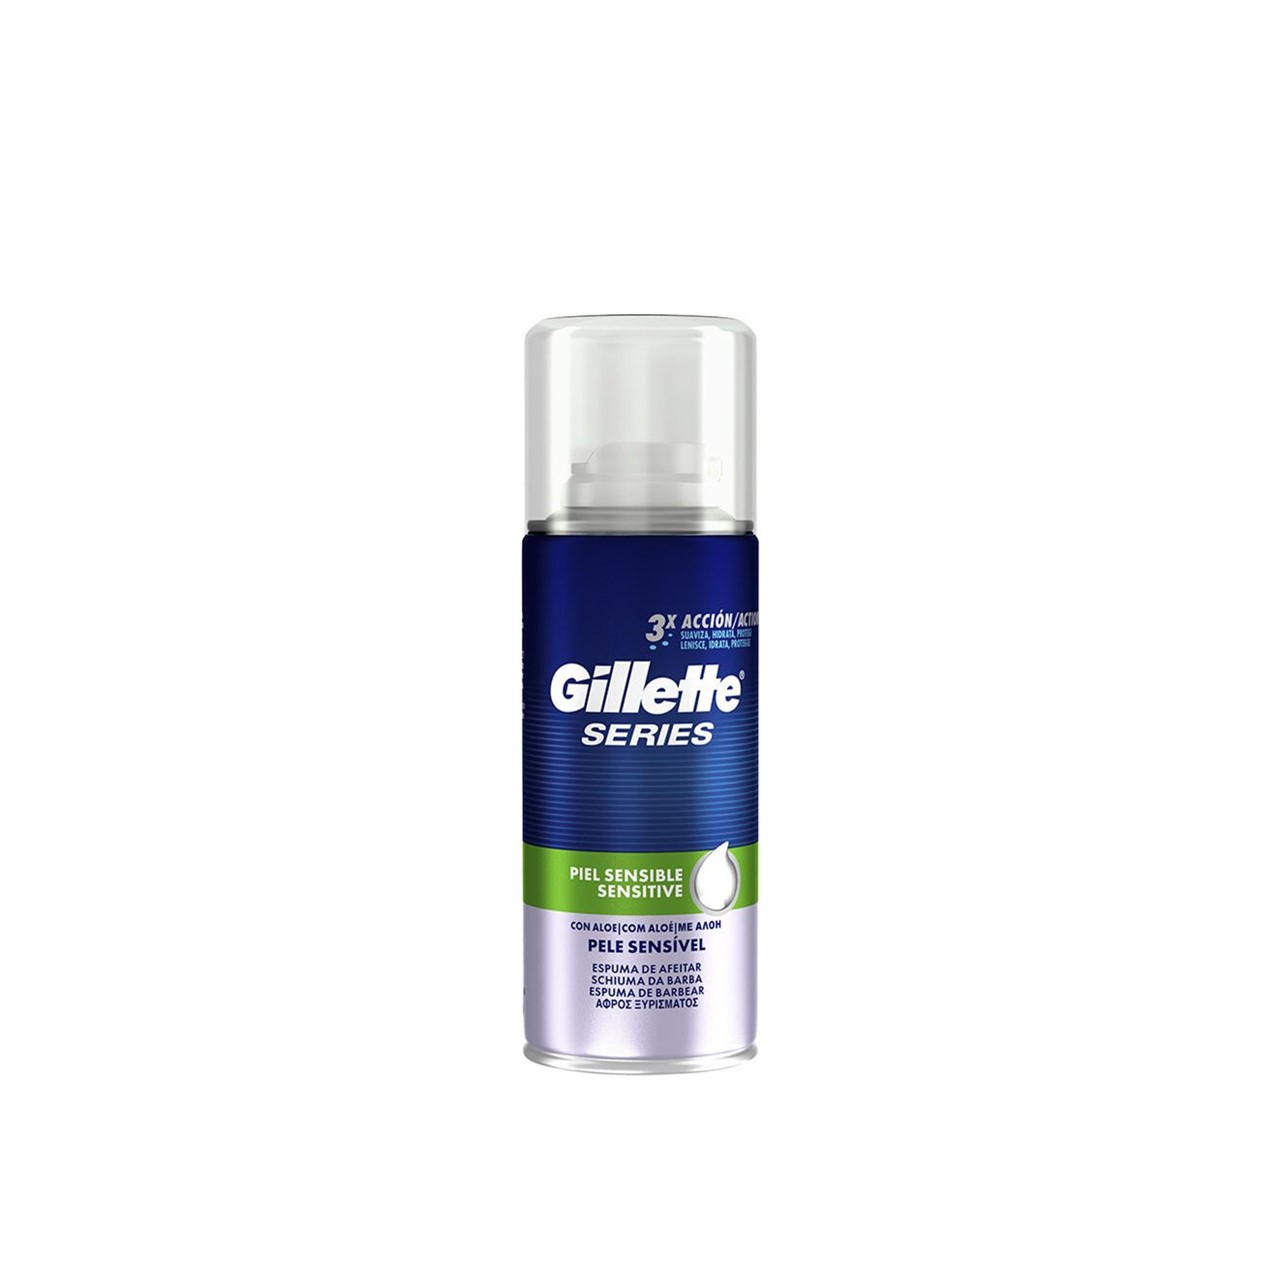 Gillette Series Sensitive Skin Shaving Foam 100ml (3.38fl oz)